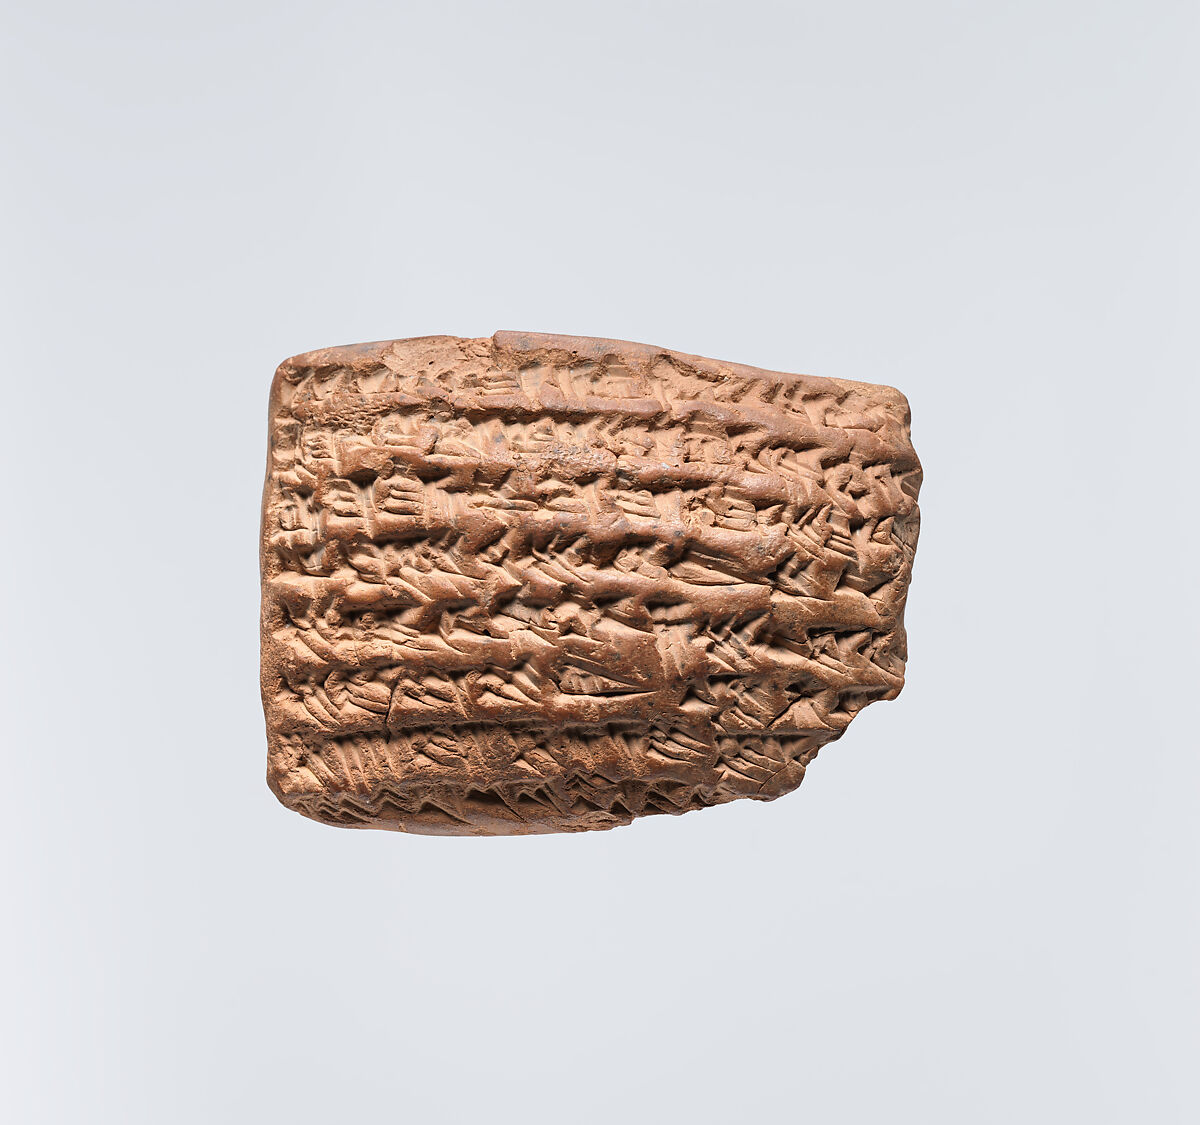 Cuneiform tablet: Gula incantation